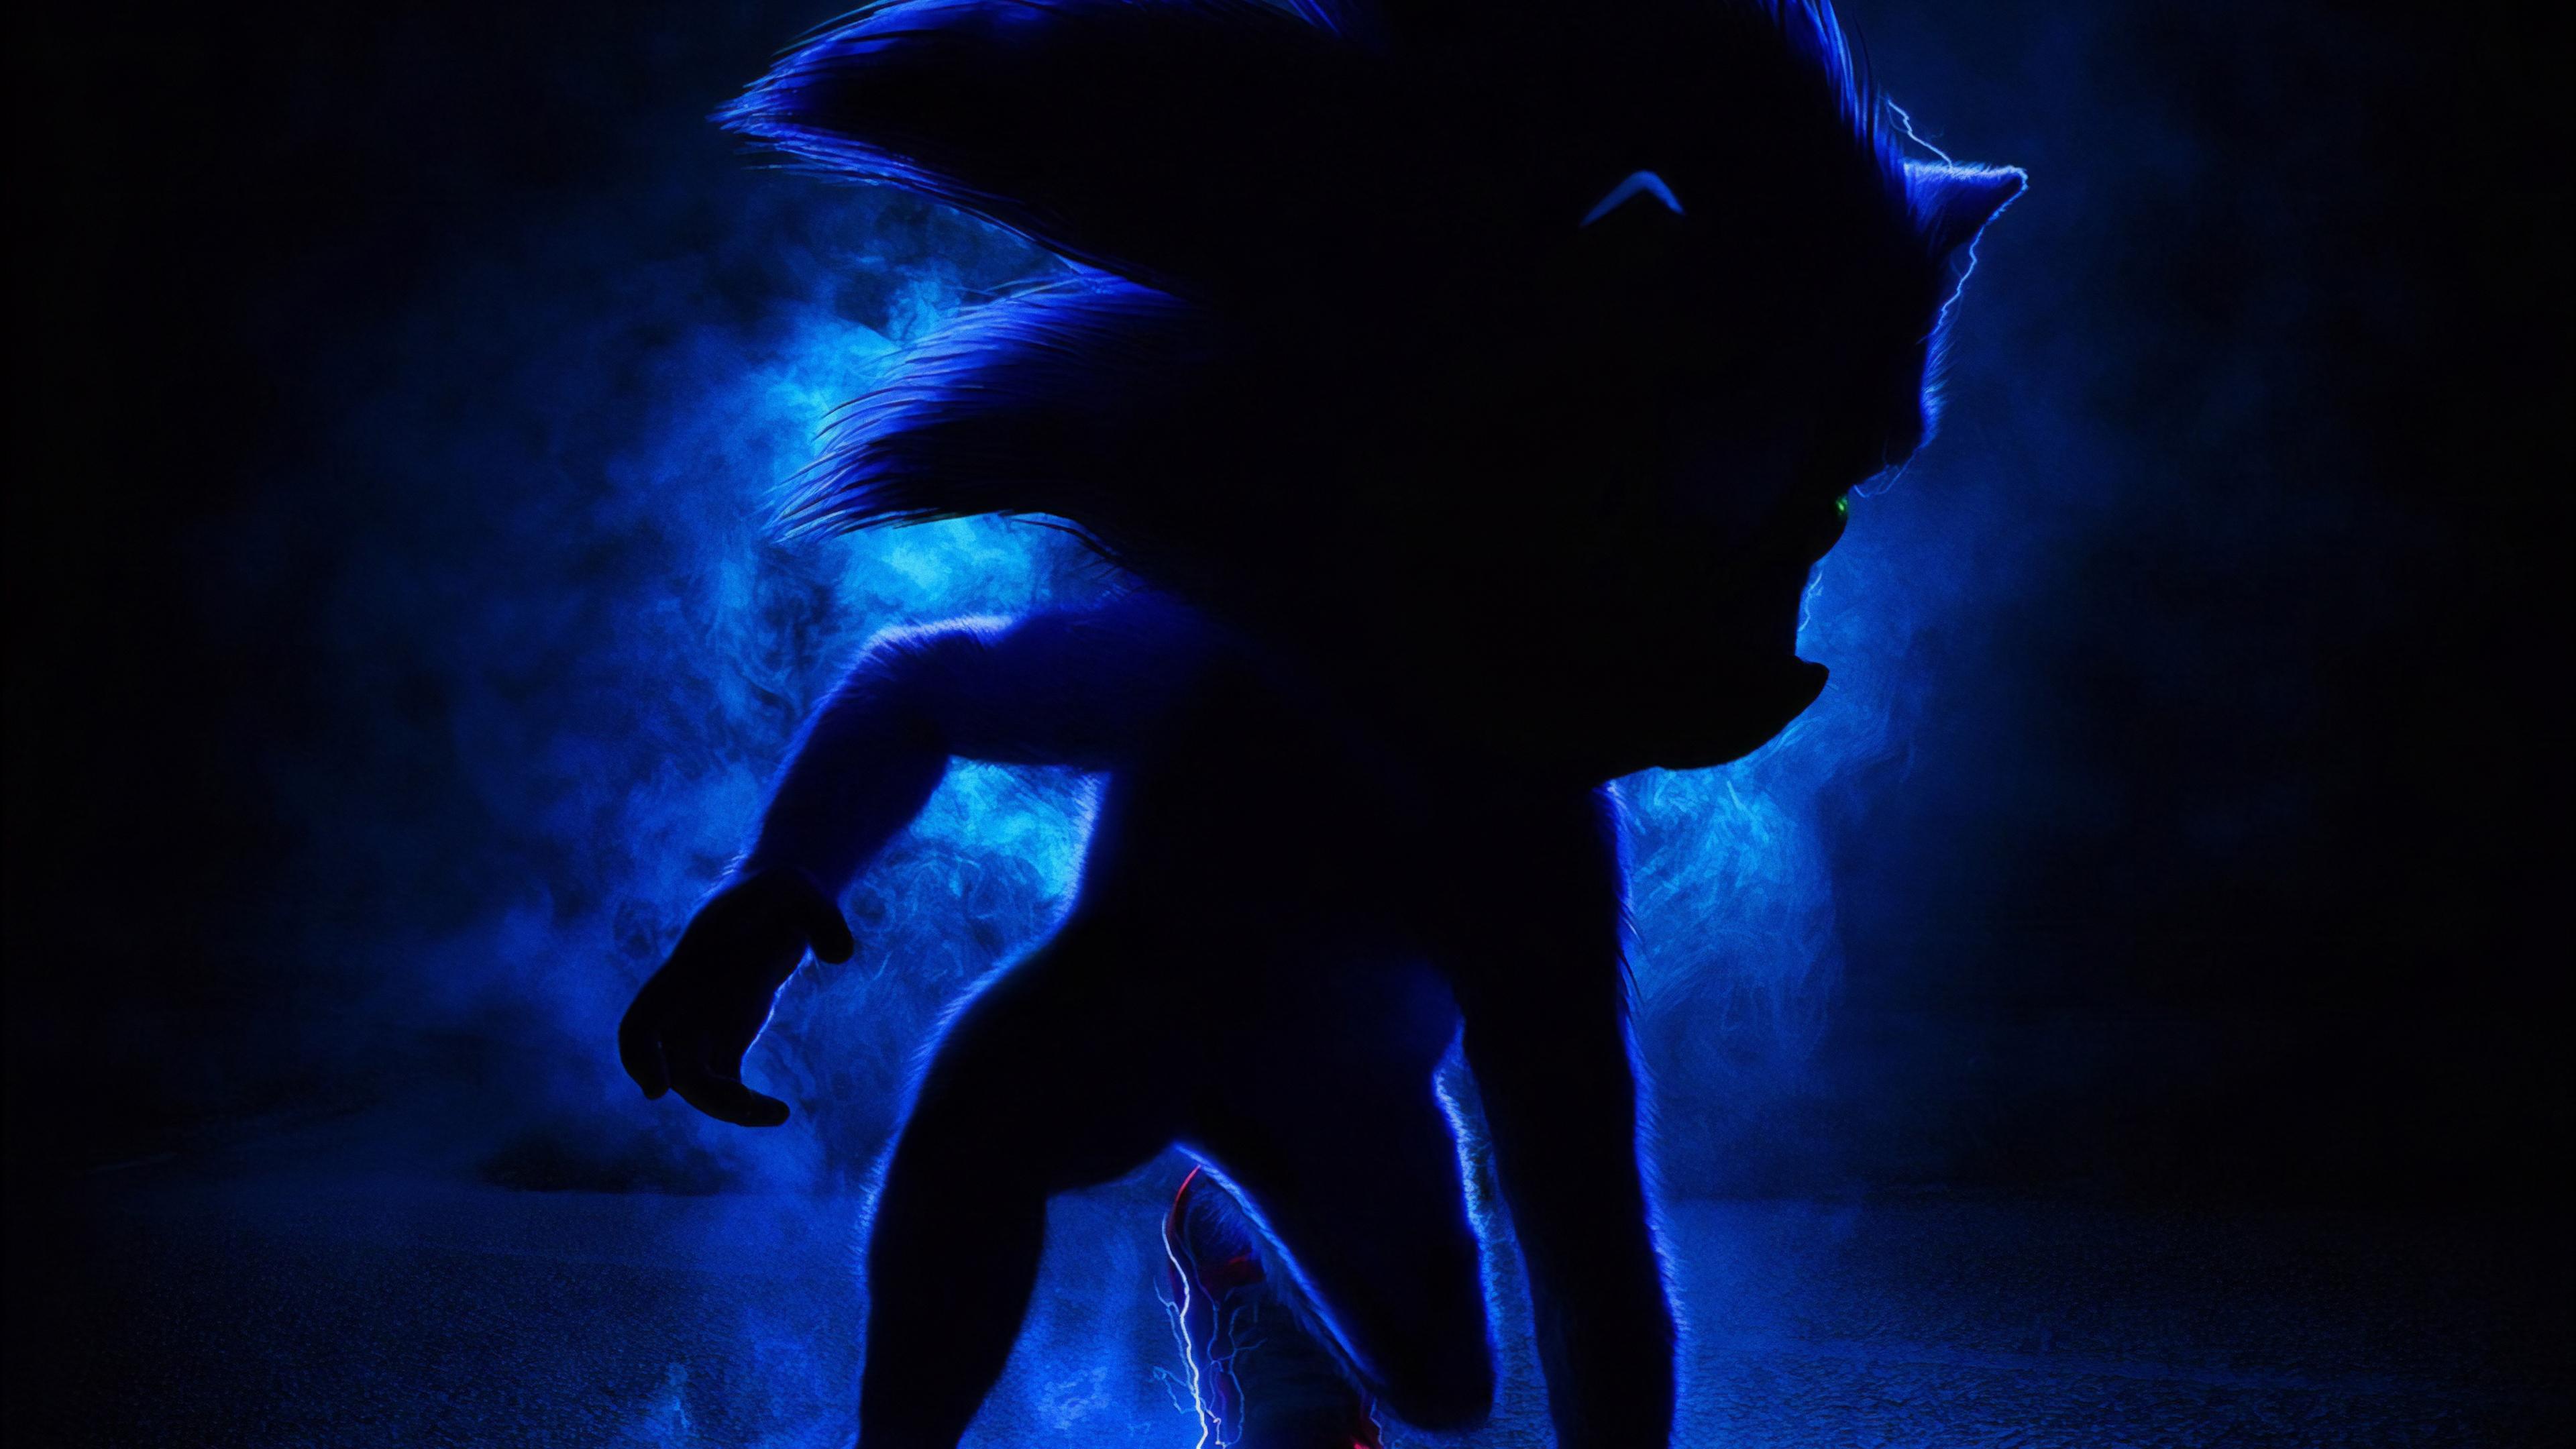 Wallpaper 4k Sonic The Hedgehog 2019 Movie 4k 2019 movies